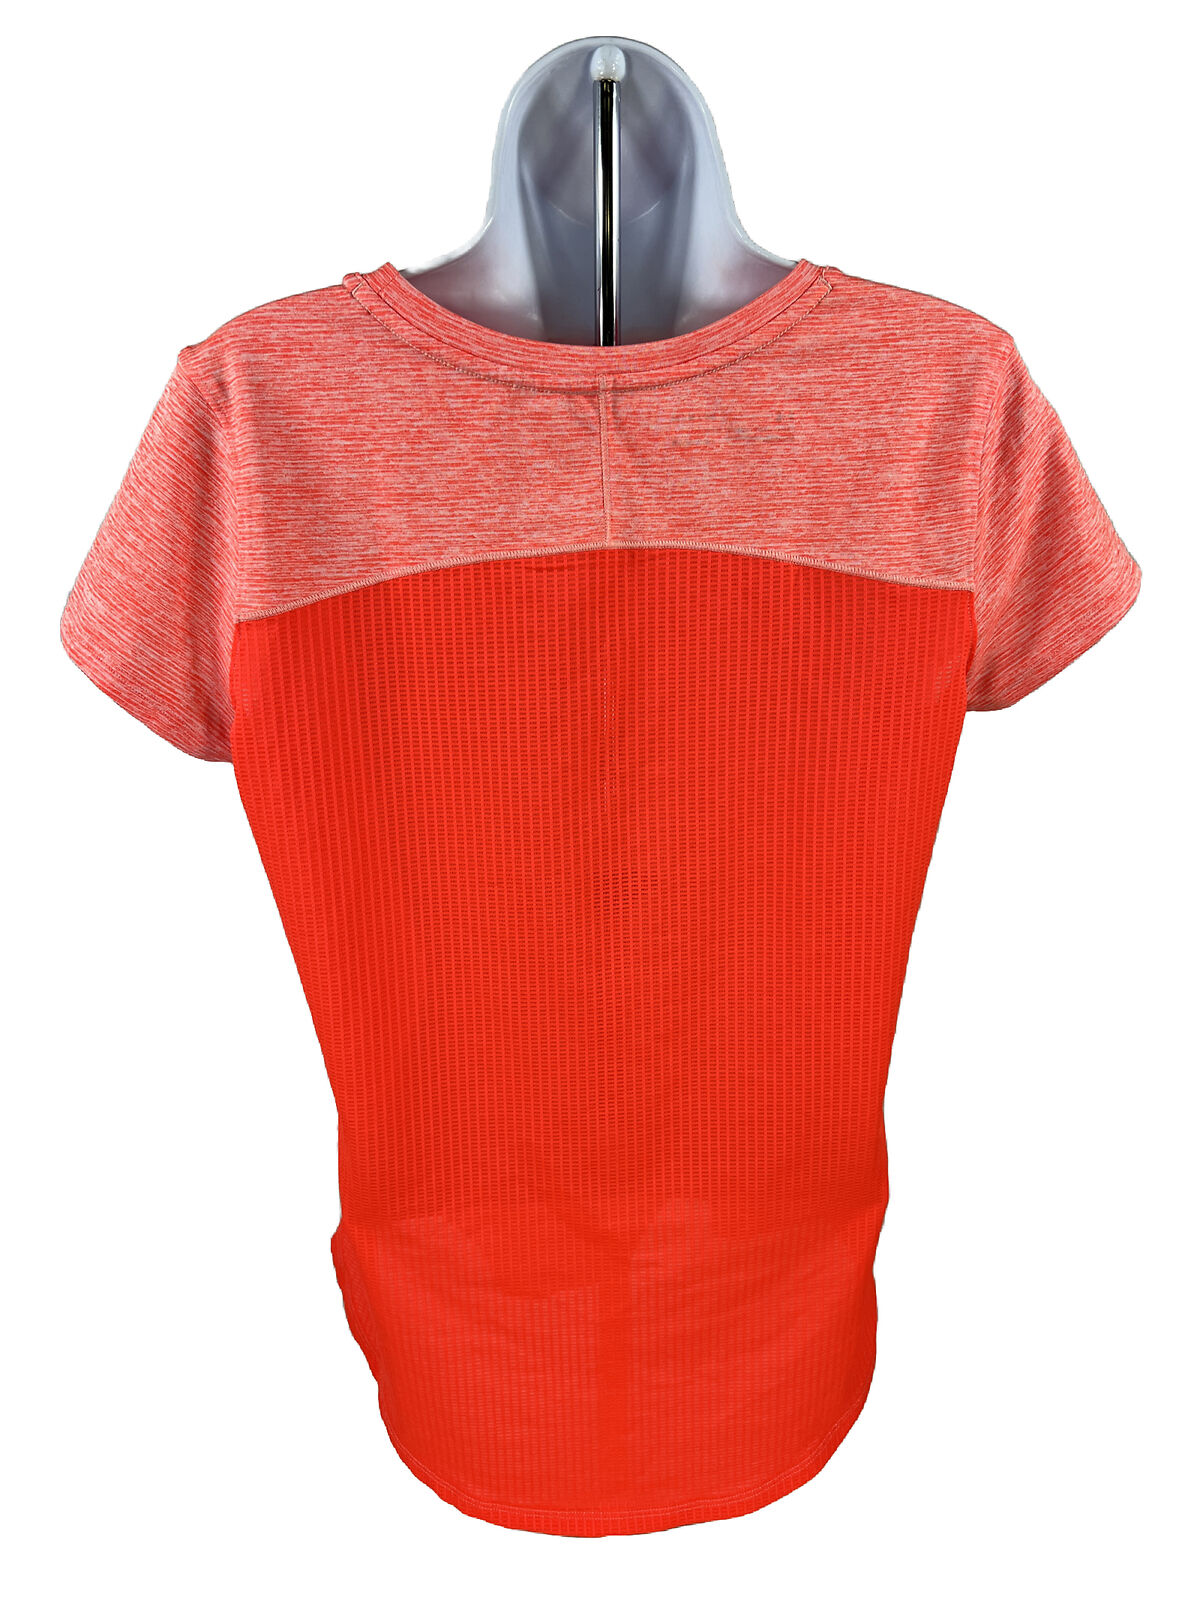 Under Armour Women's Coral Threadborne HeatGear Shirt - M